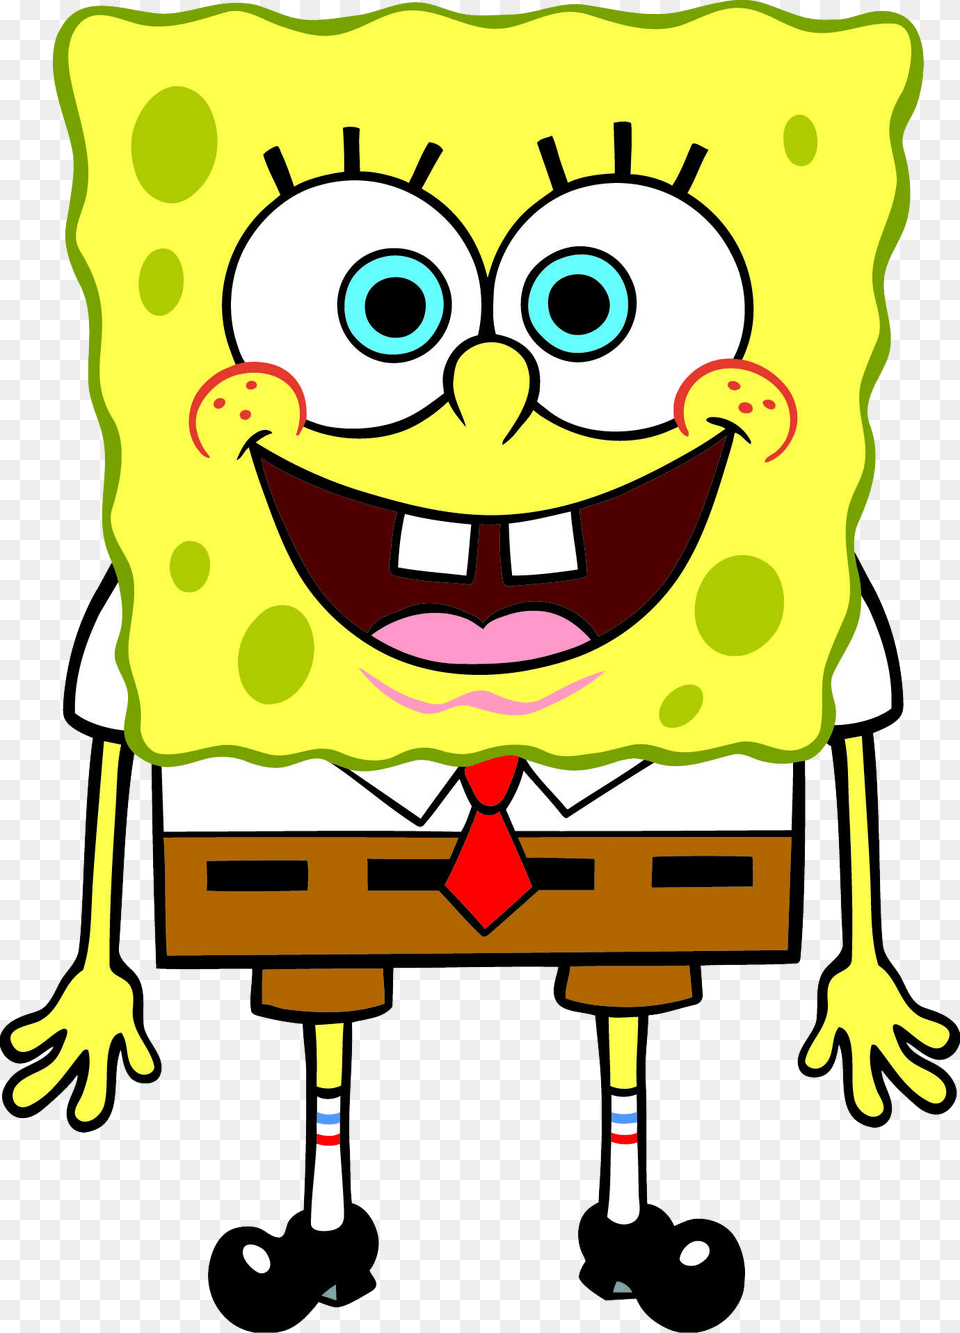 Spongebob Spongebob Squarepants Character, Cartoon, Baby, Person Png Image